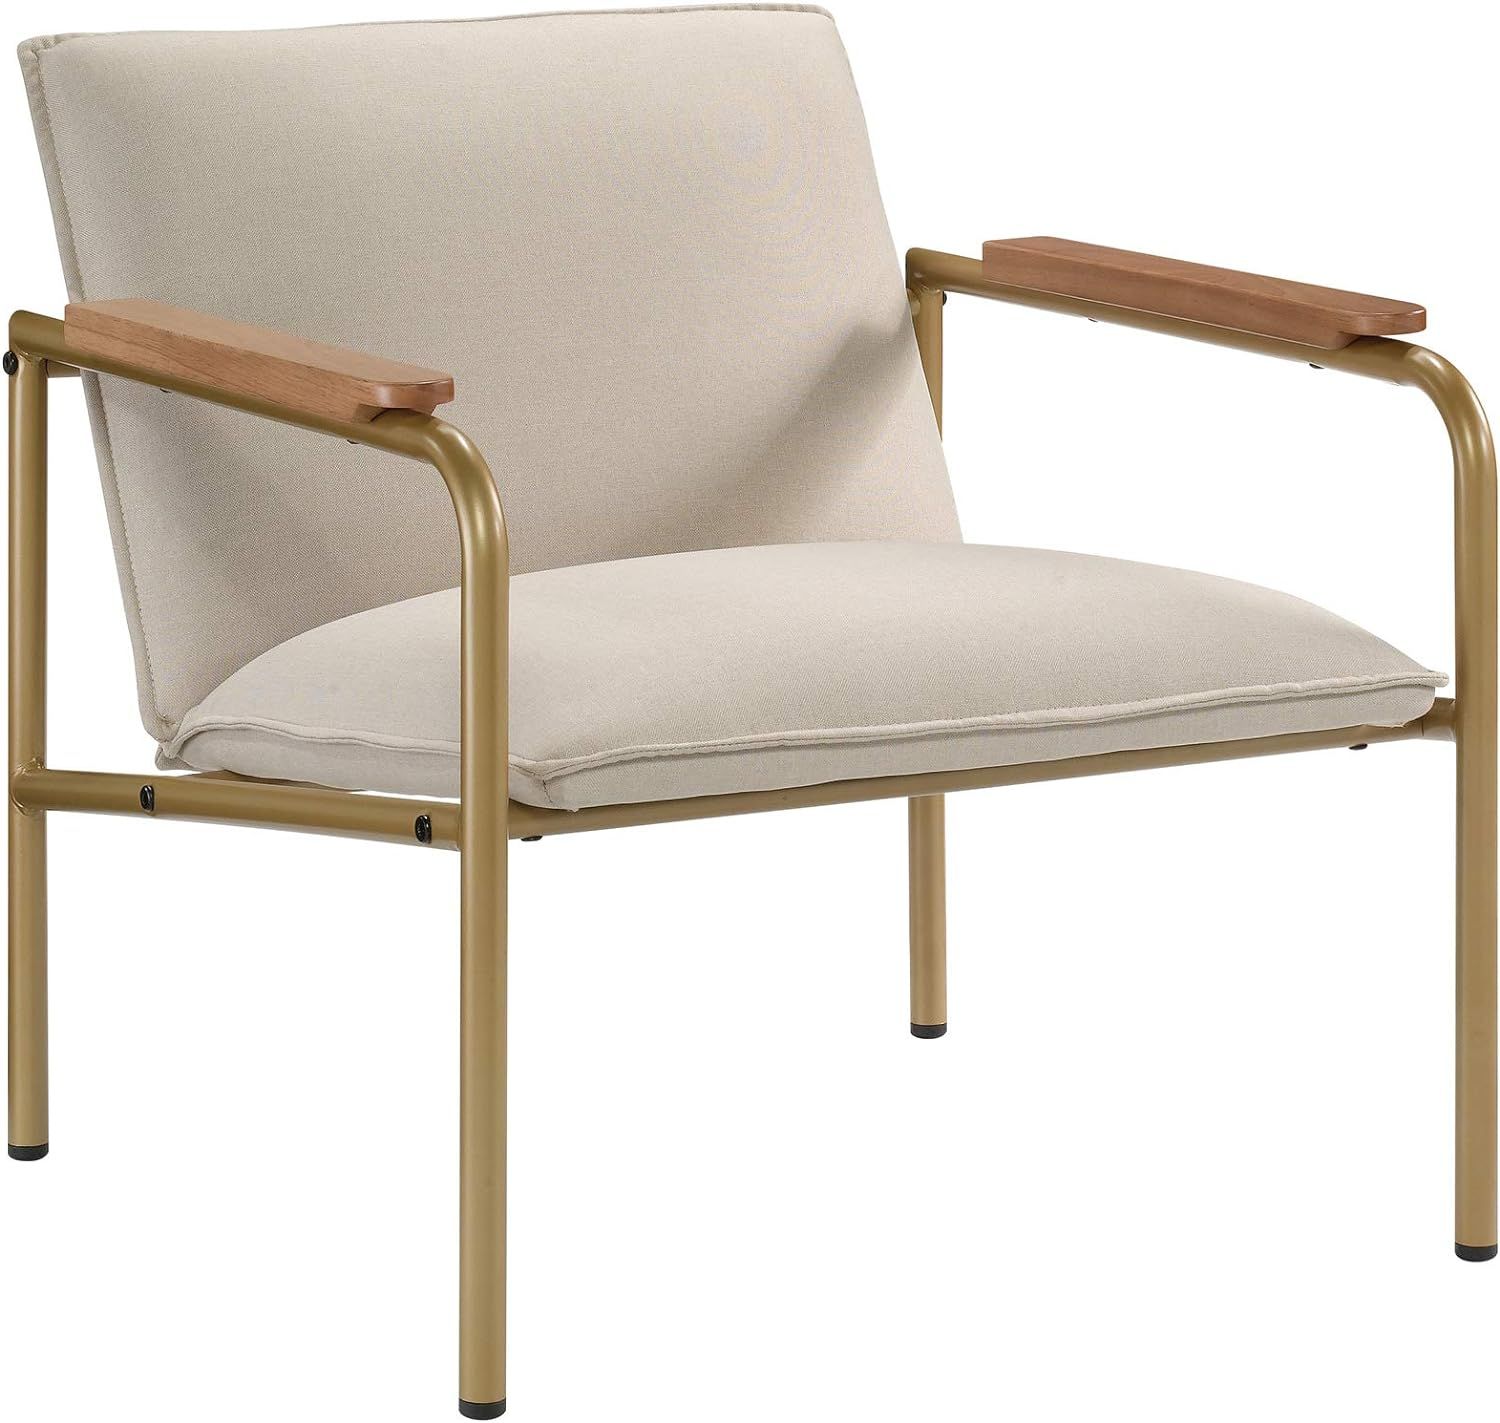 Sauder Coral Cape Lounge Chair, L: 26.77" x W: 28.35" x H: 26.77", Ivory Finish | Amazon (US)